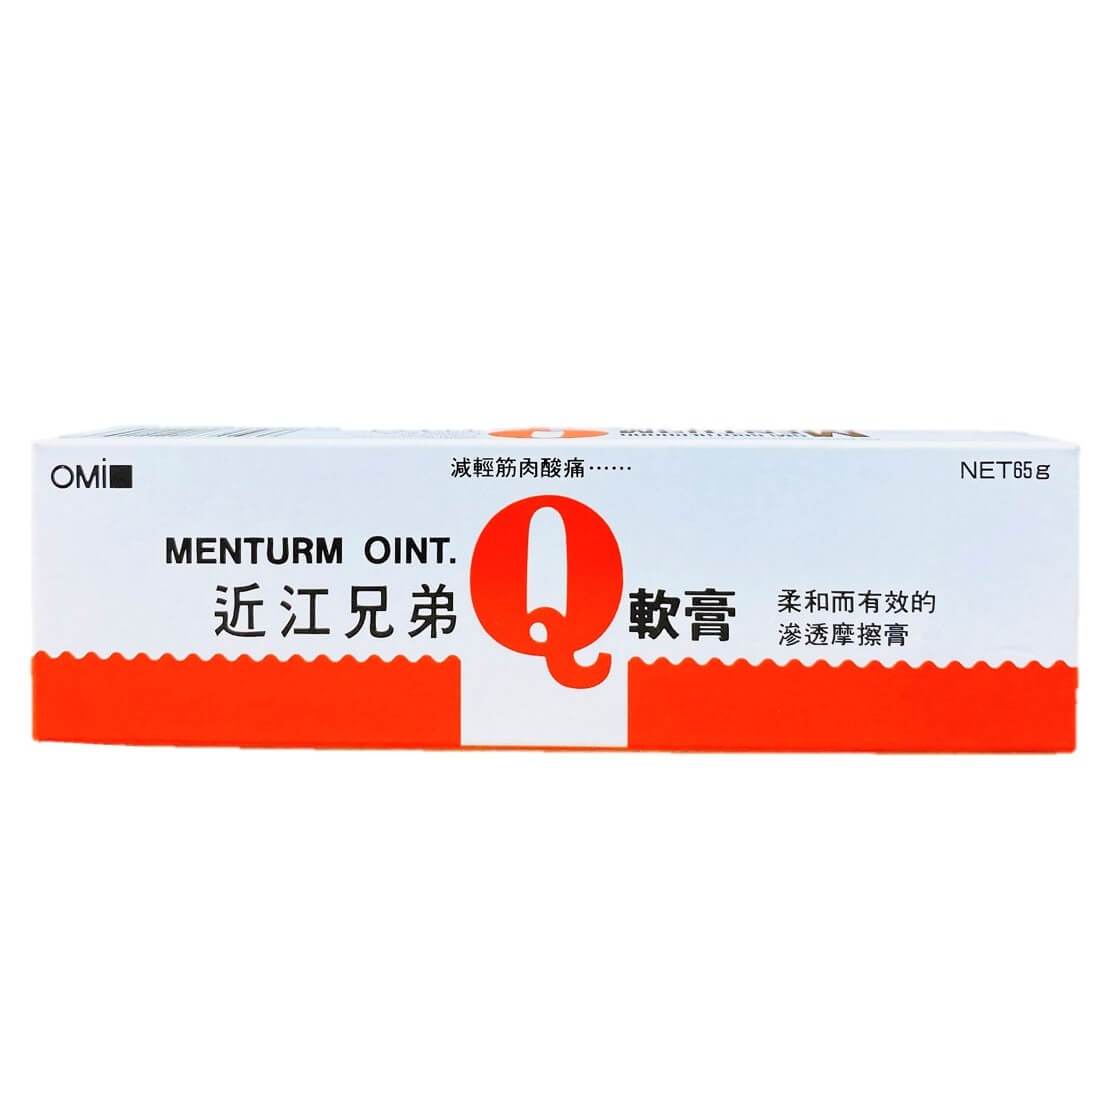 Omi Brotherhood Menturm Q Ointment (65 Grams) - Buy at New Green Nutrition